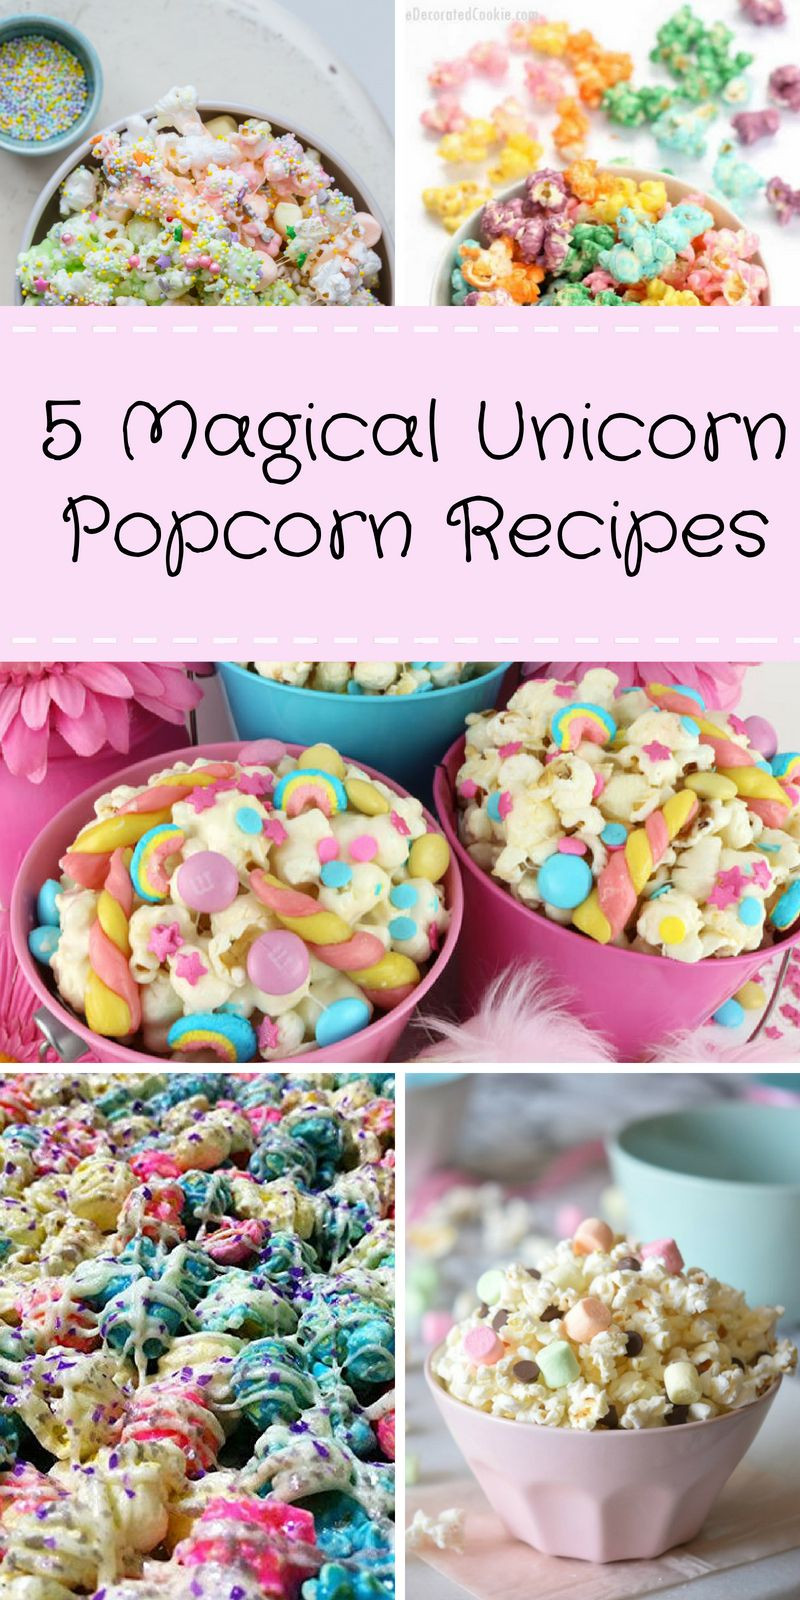 Mermaid And Unicorn Party Snack Ideas
 Unicorn Popcorn 5 Magical Recipes Addi 5th